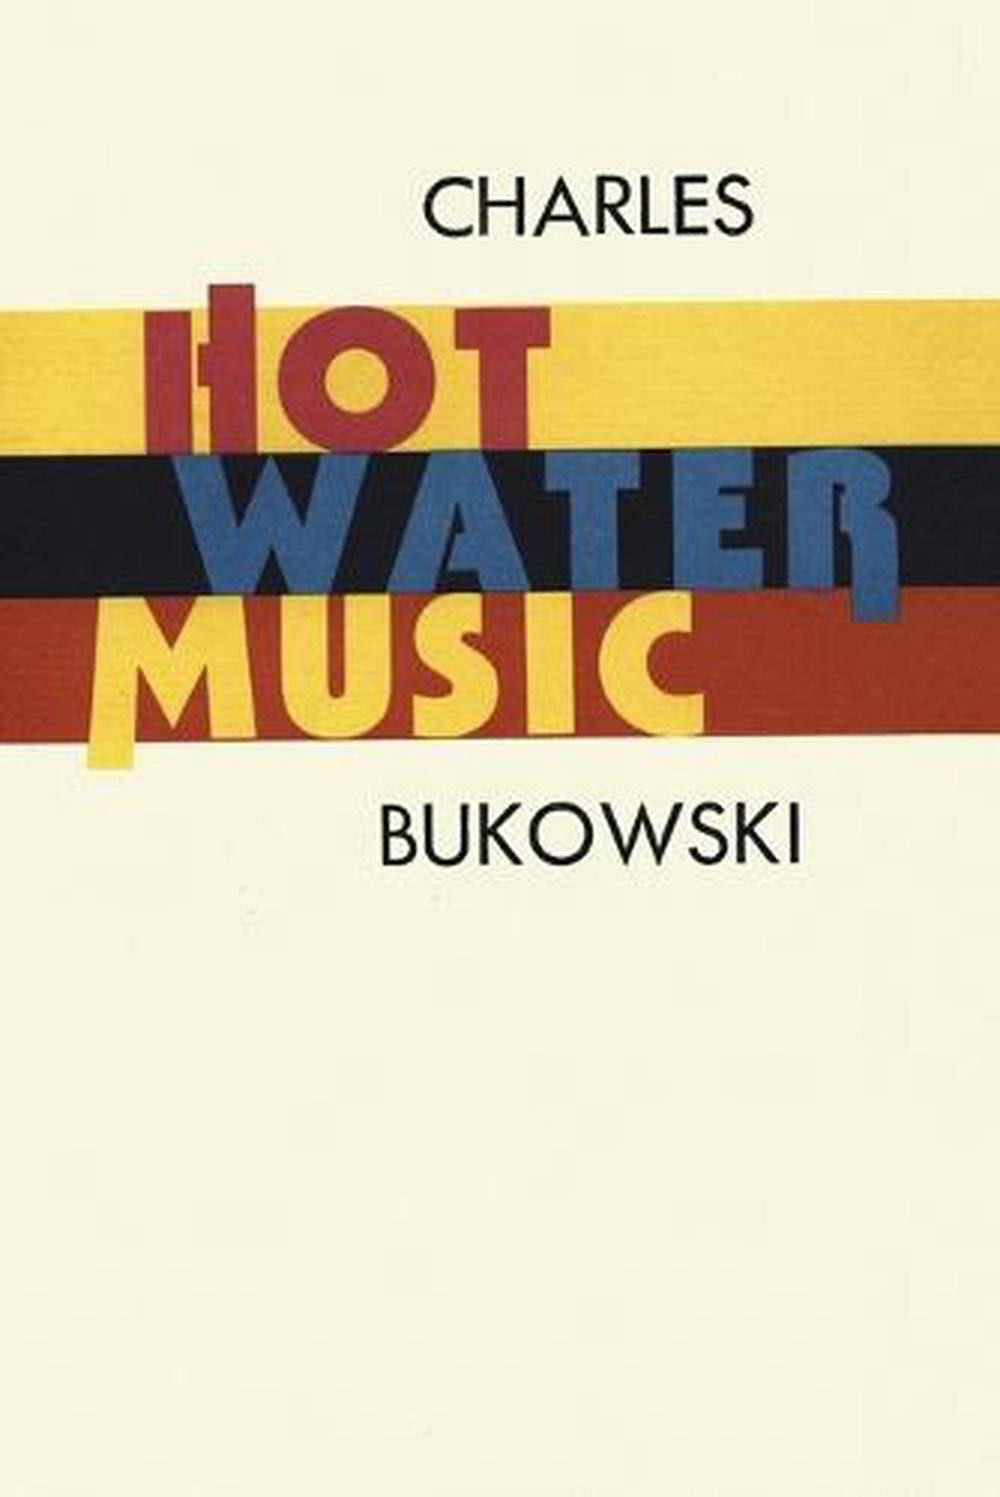 Hot Water Music [Book]